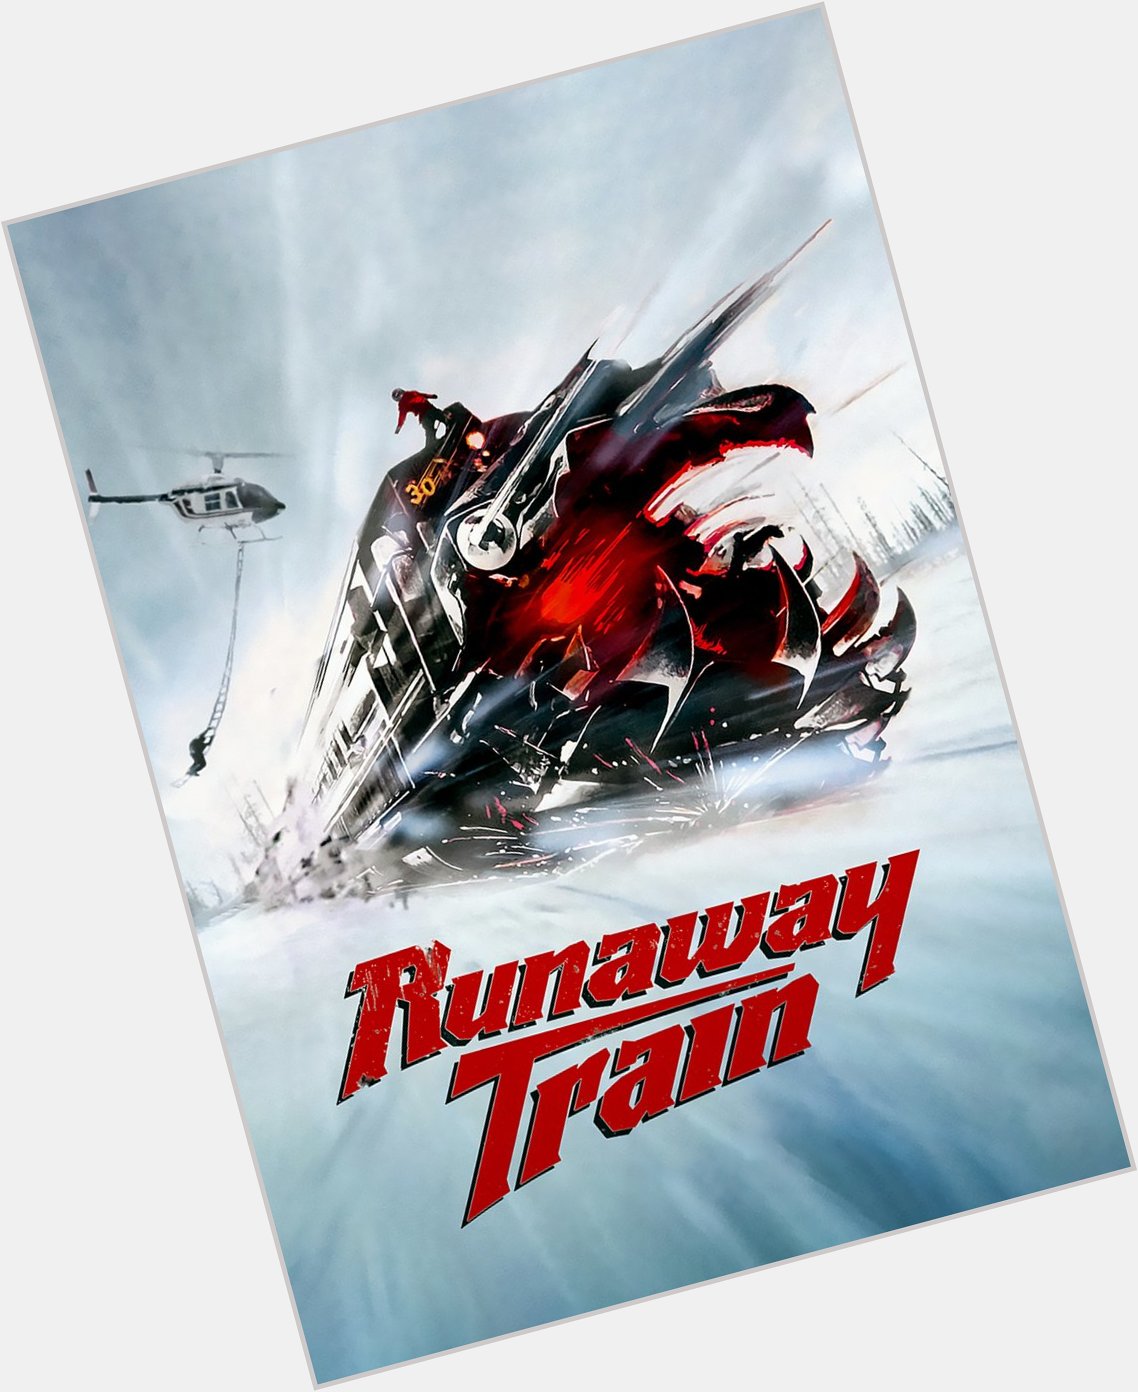 Runaway Train  (1985)
Happy Birthday, Jon Voight! 